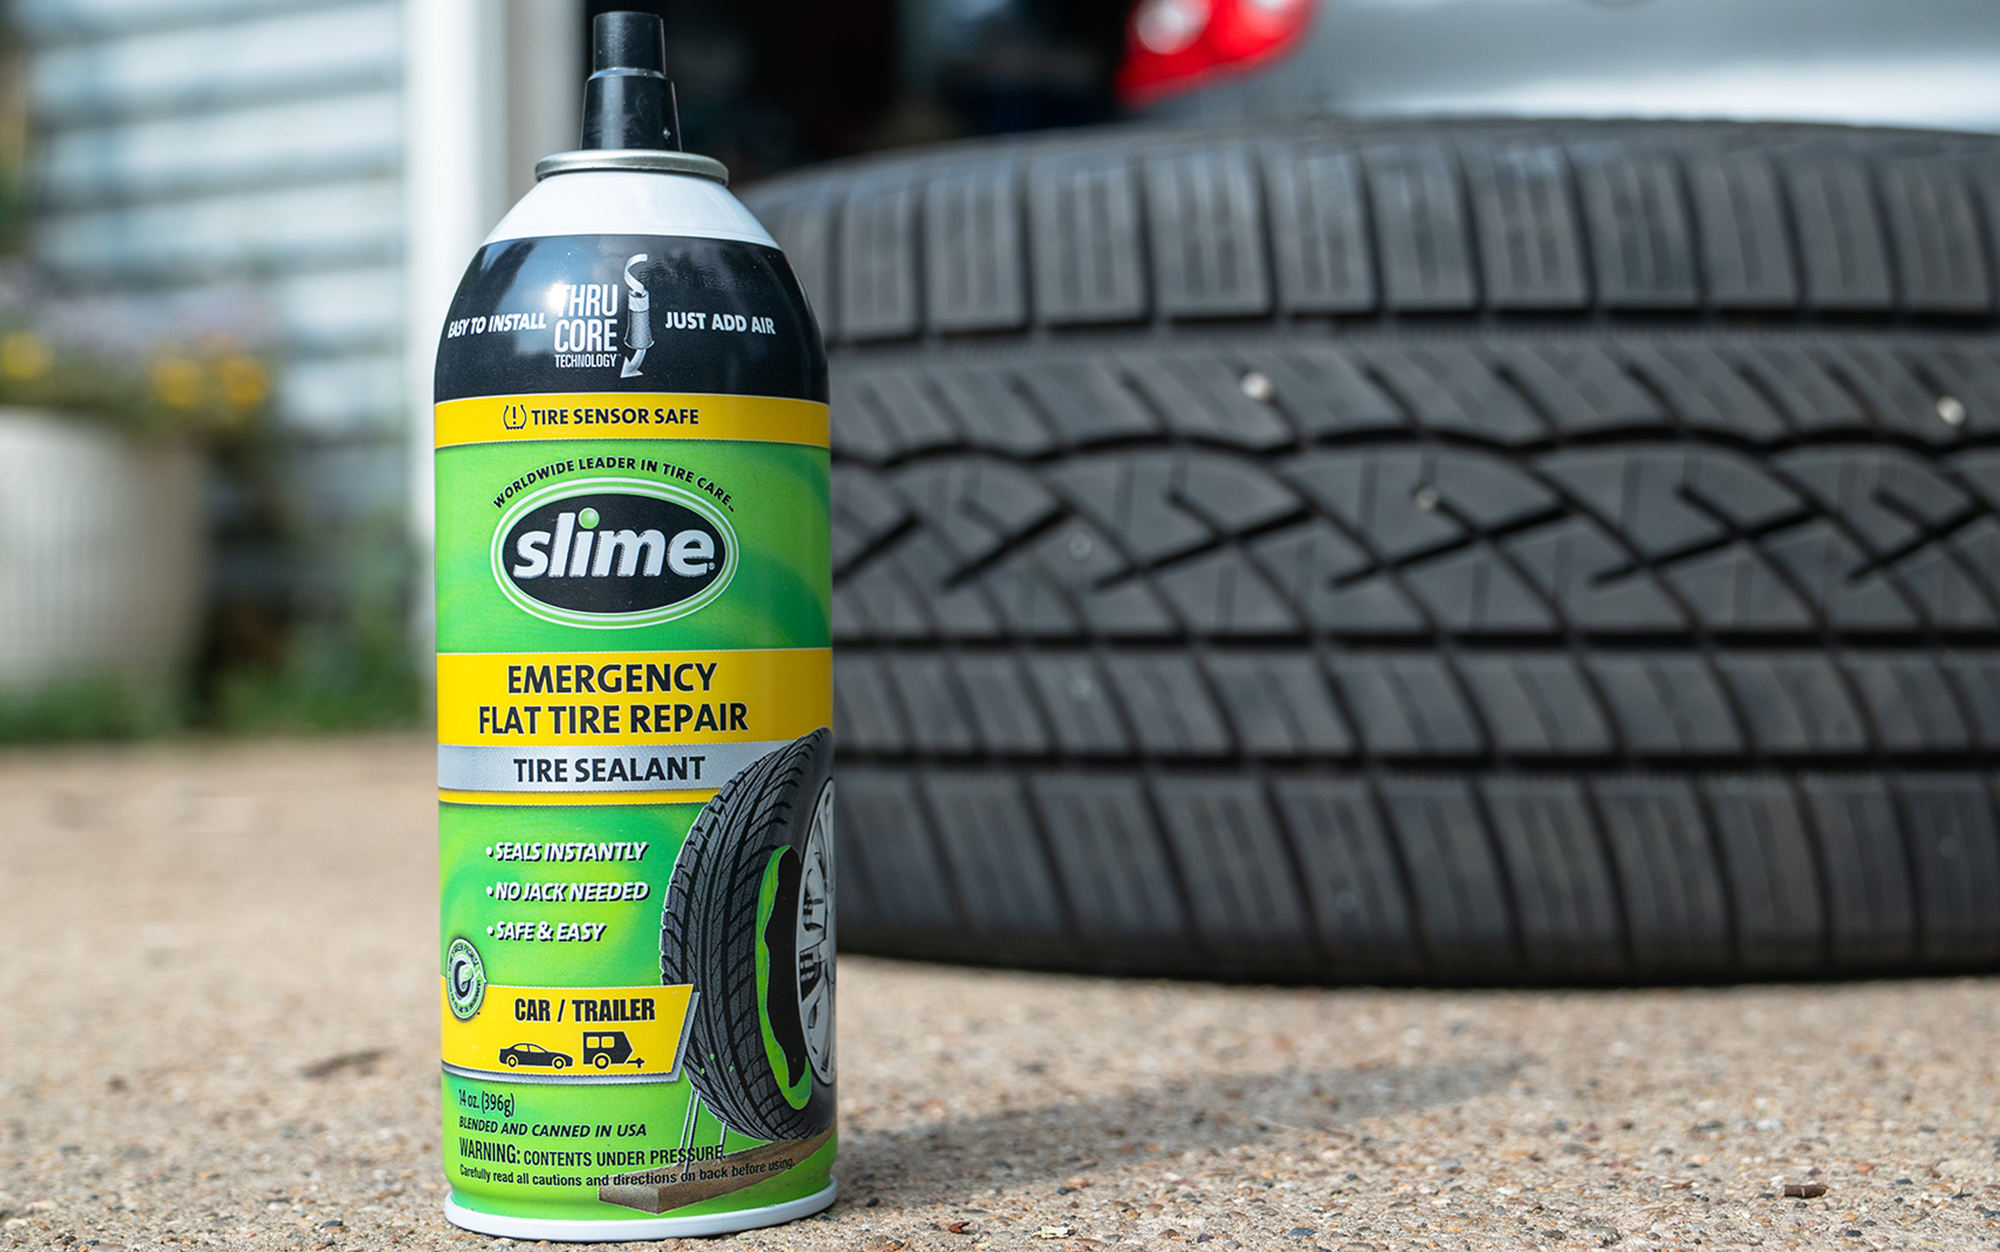 We tested Slime Tire Repair.